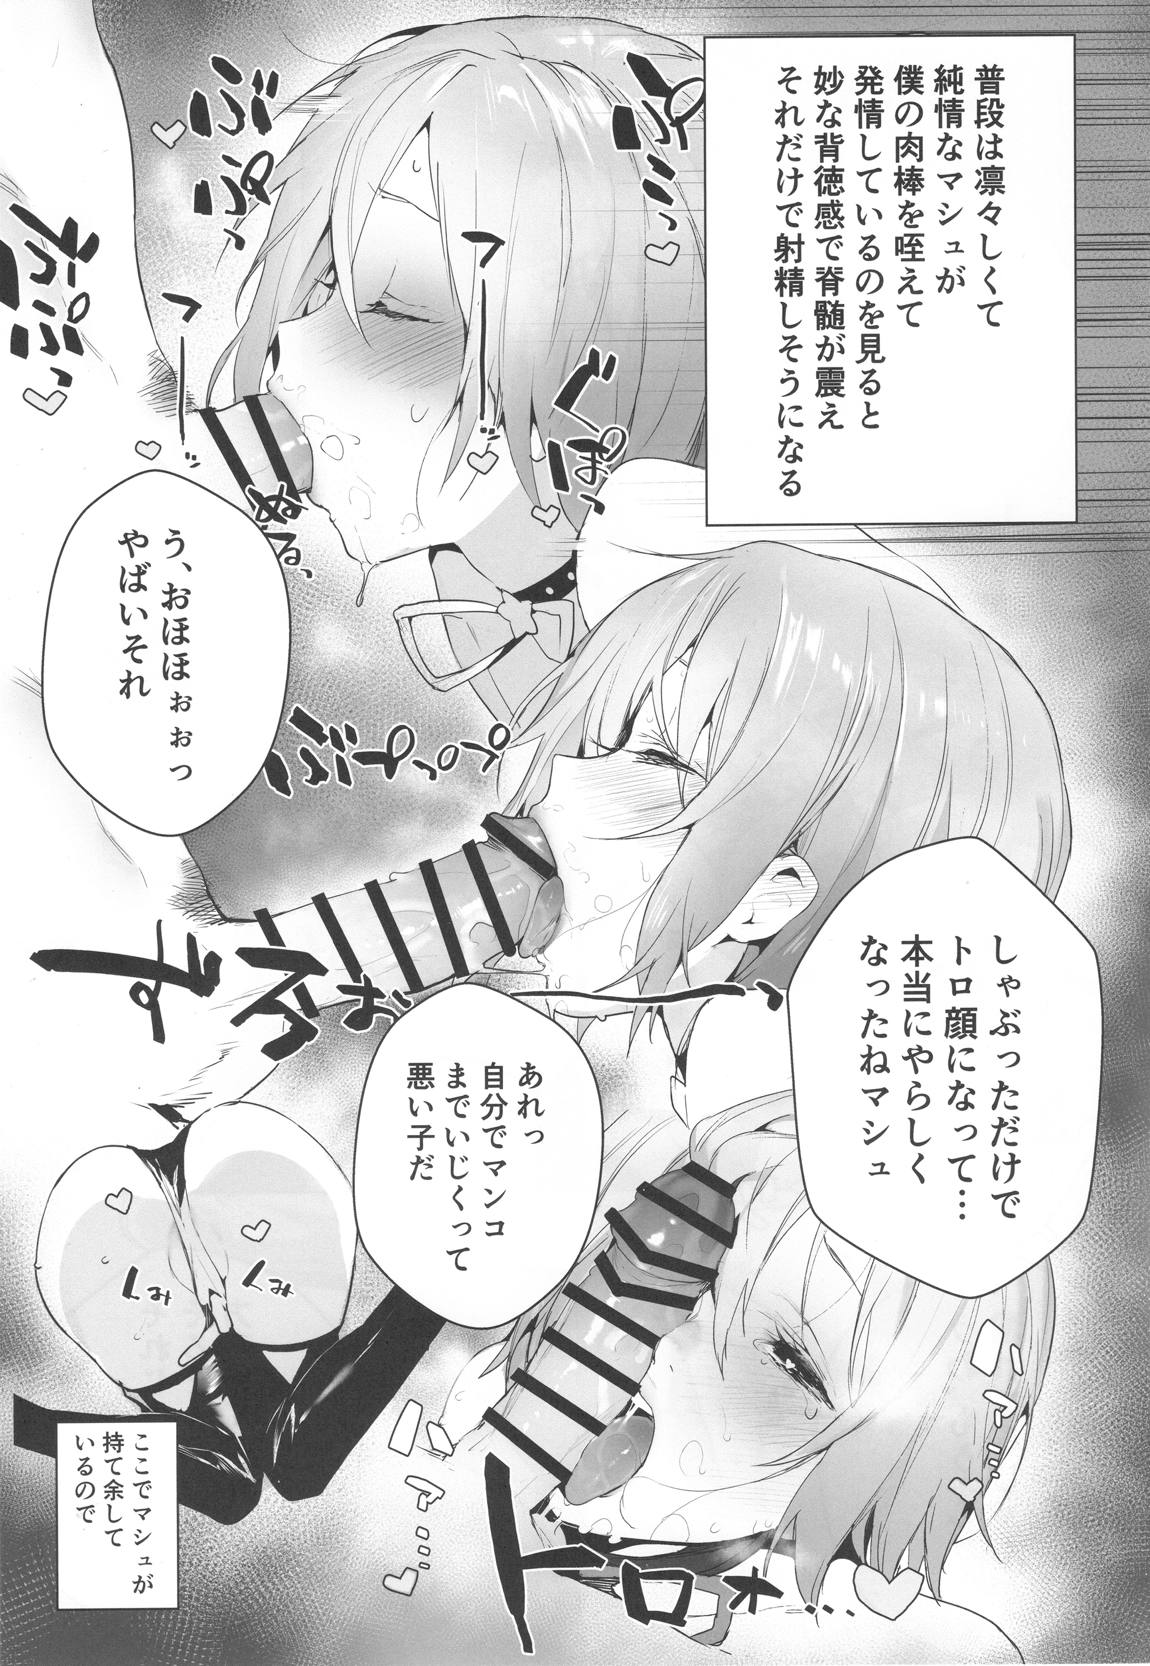 Manga Sick 14ページ